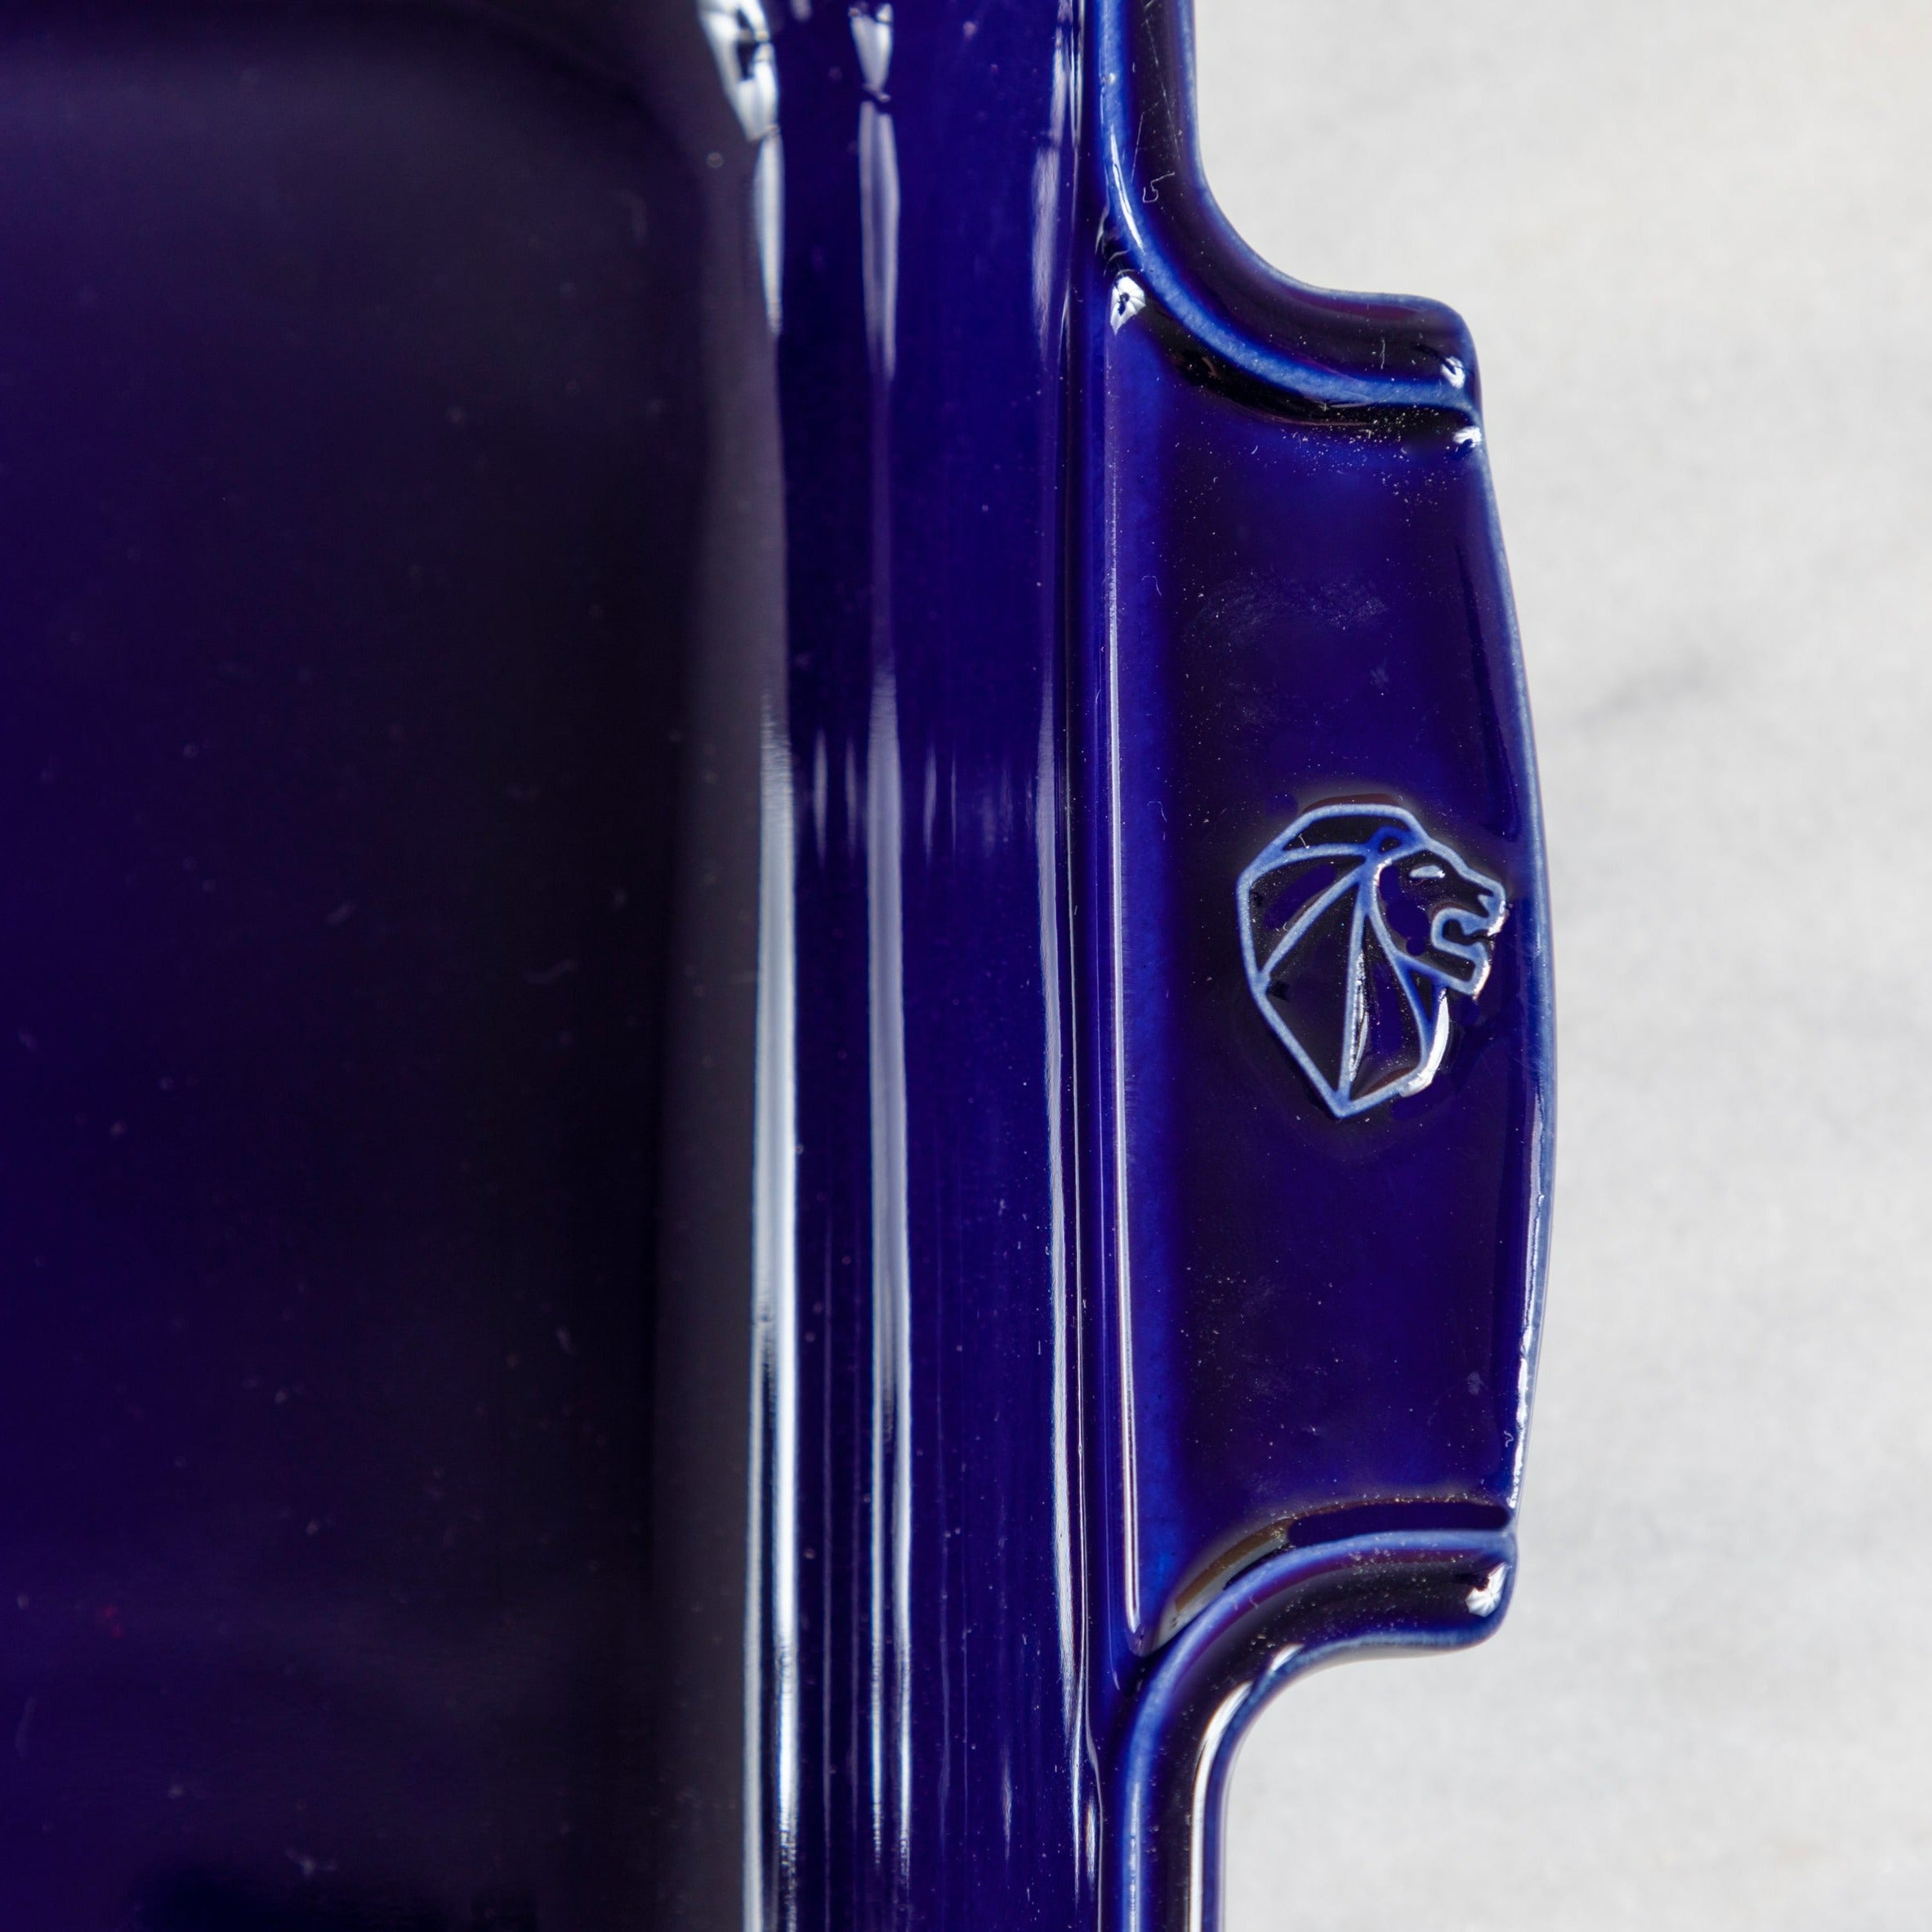 Peugeot Appolia Ceramic 11&quot; Square Baker, Deep Blue